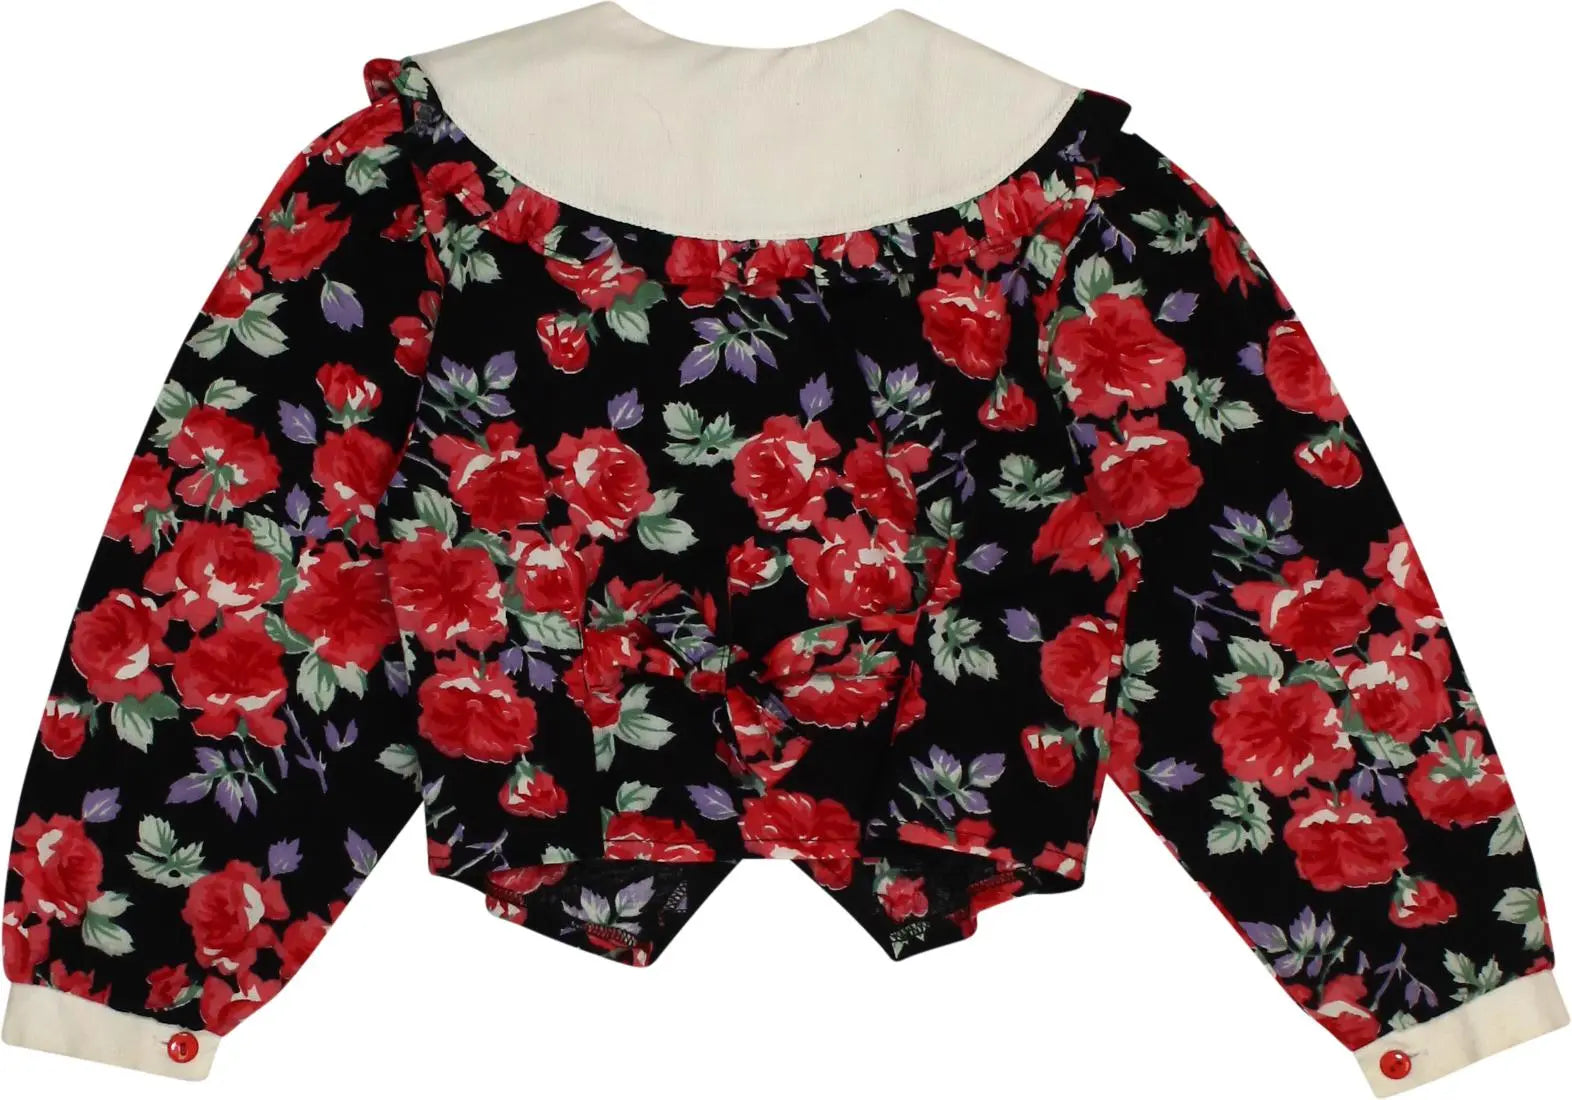 C&A - Vintage Floral Blouse- ThriftTale.com - Vintage and second handclothing